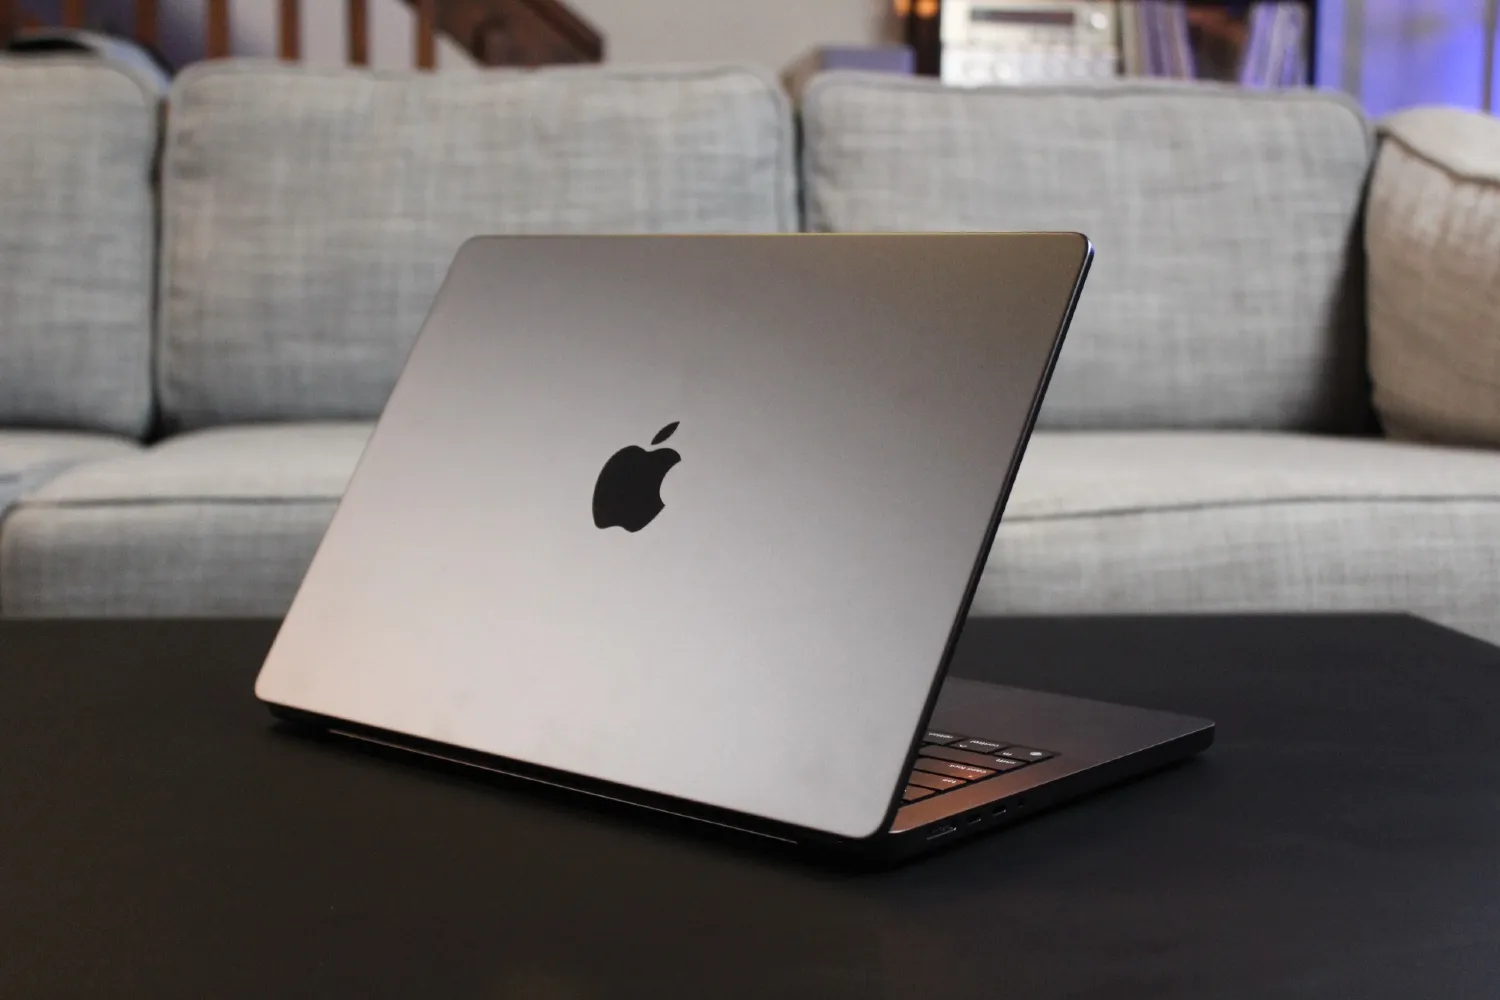 Крышка MacBook Pro на черном столе.